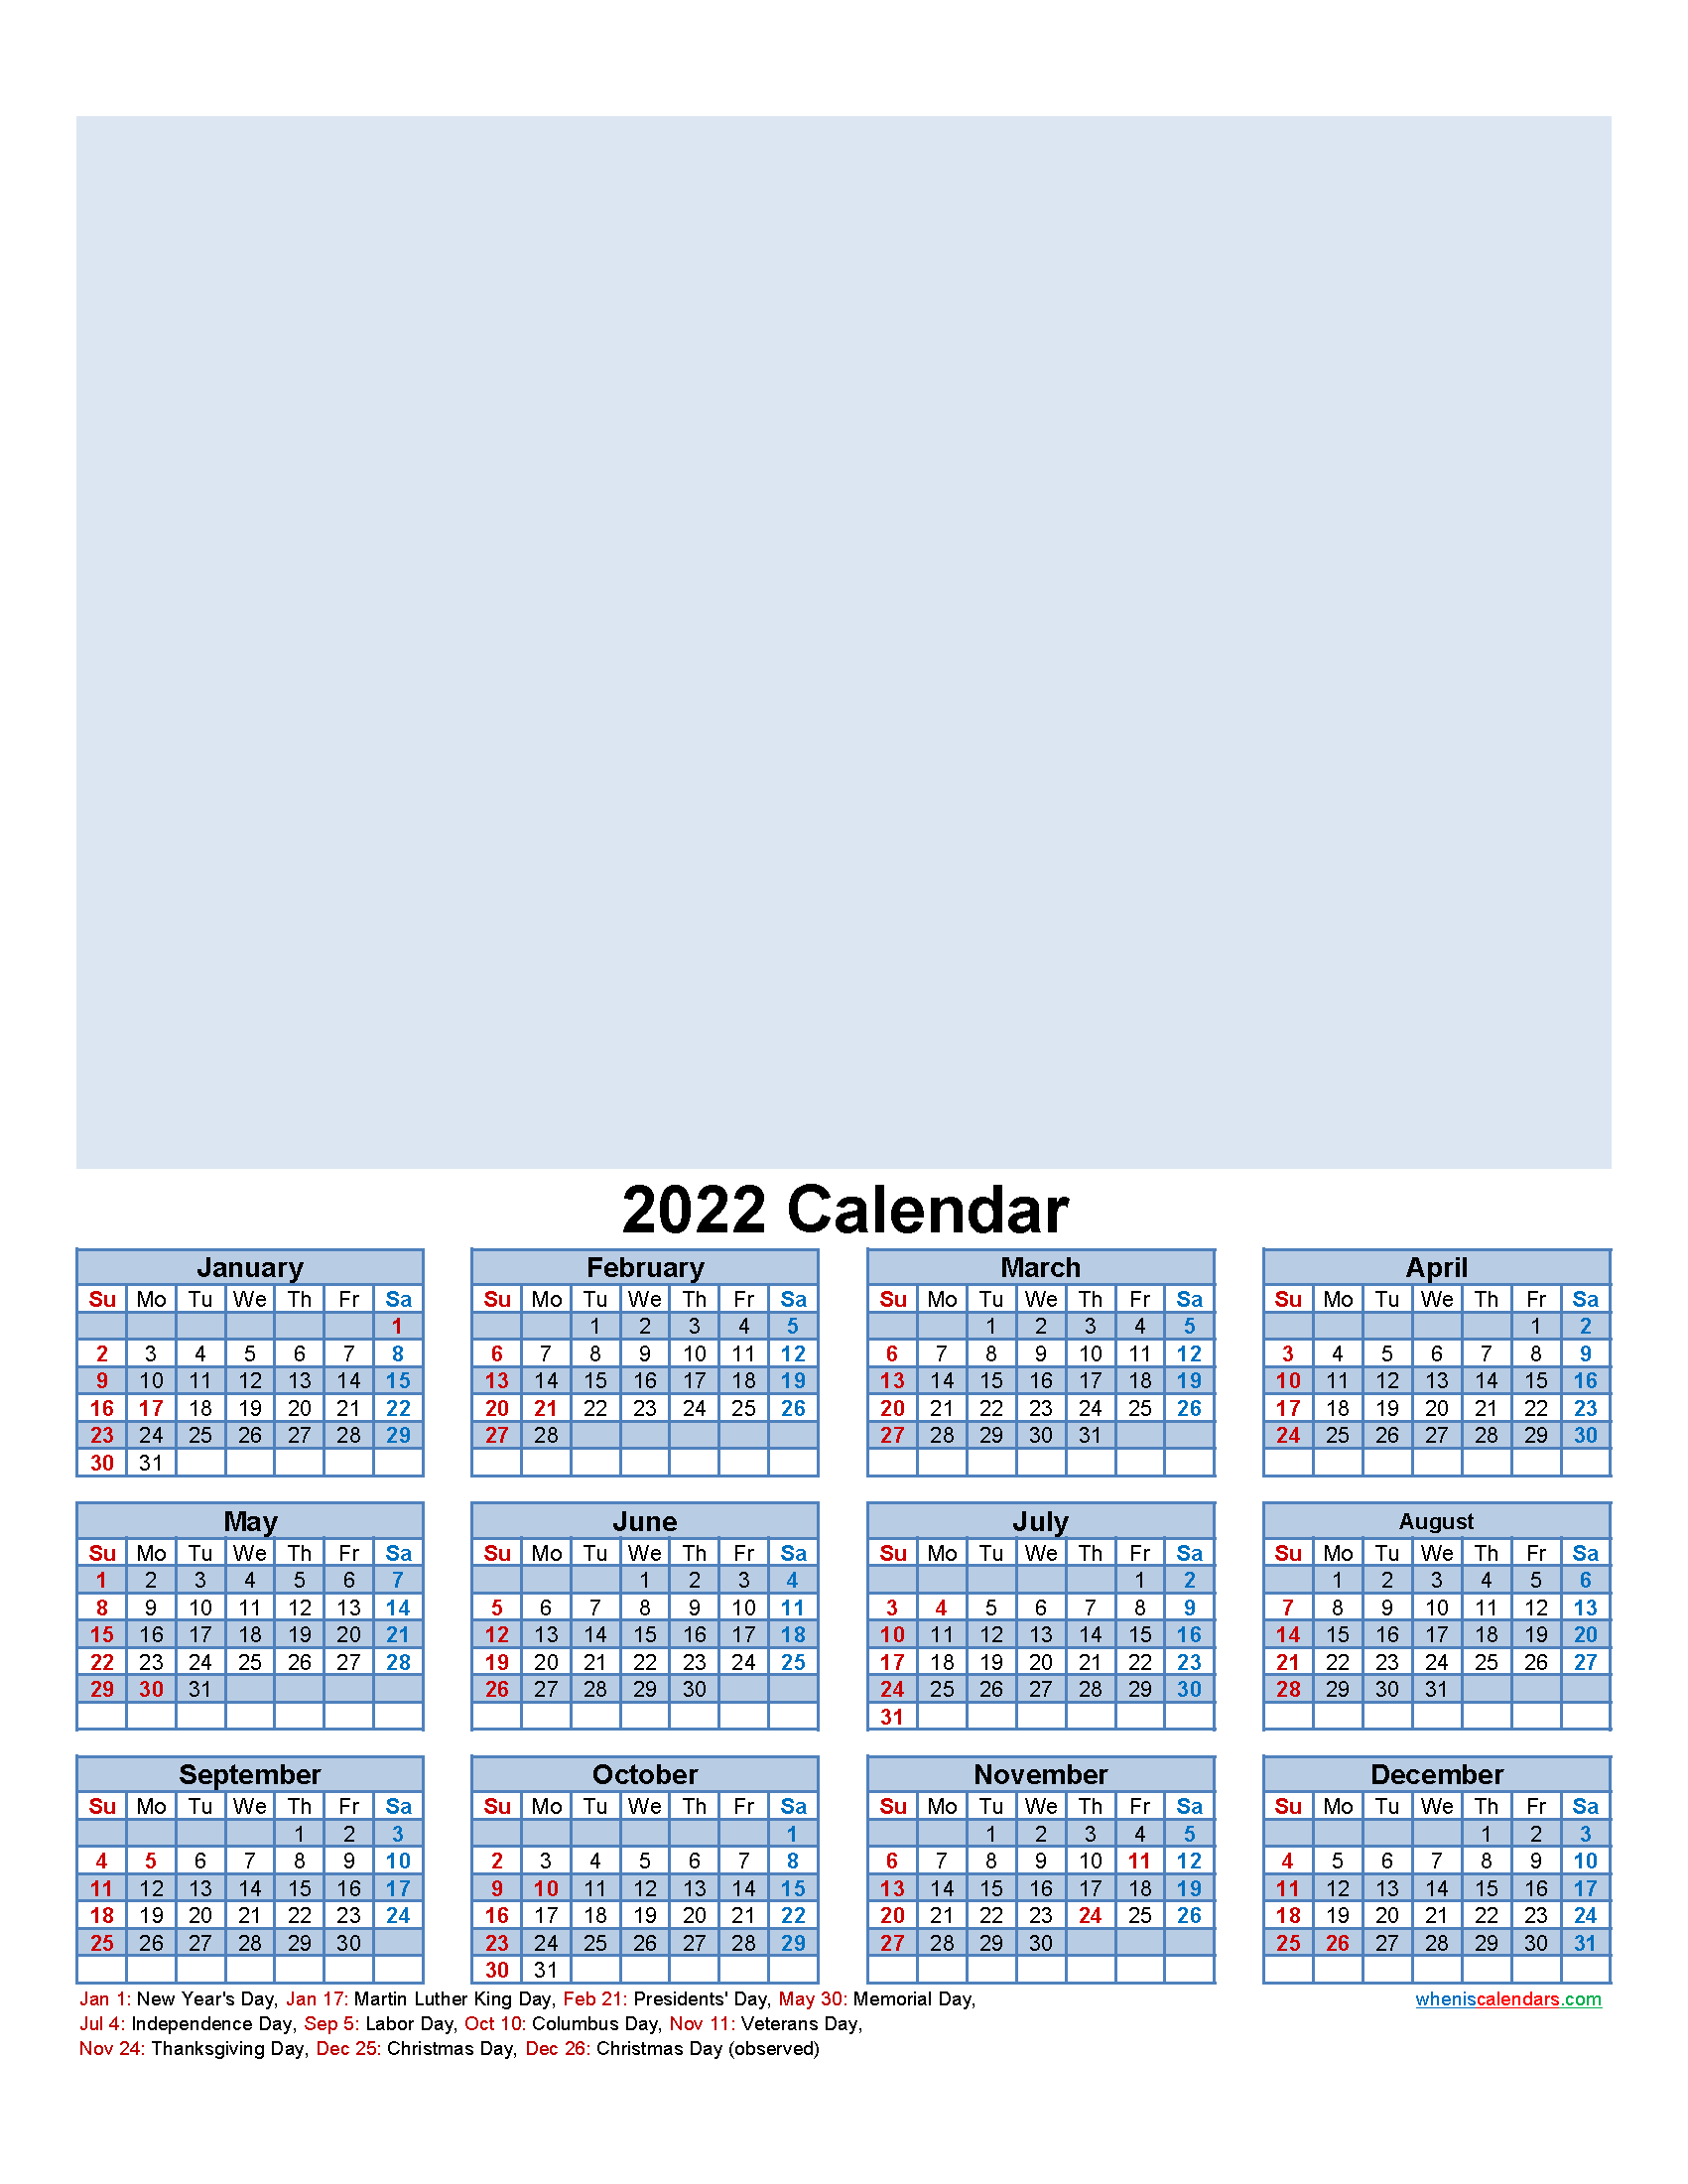 Customized Calendar 2022 Free.Free Printable Photo Calendar 2022 Pdf Image